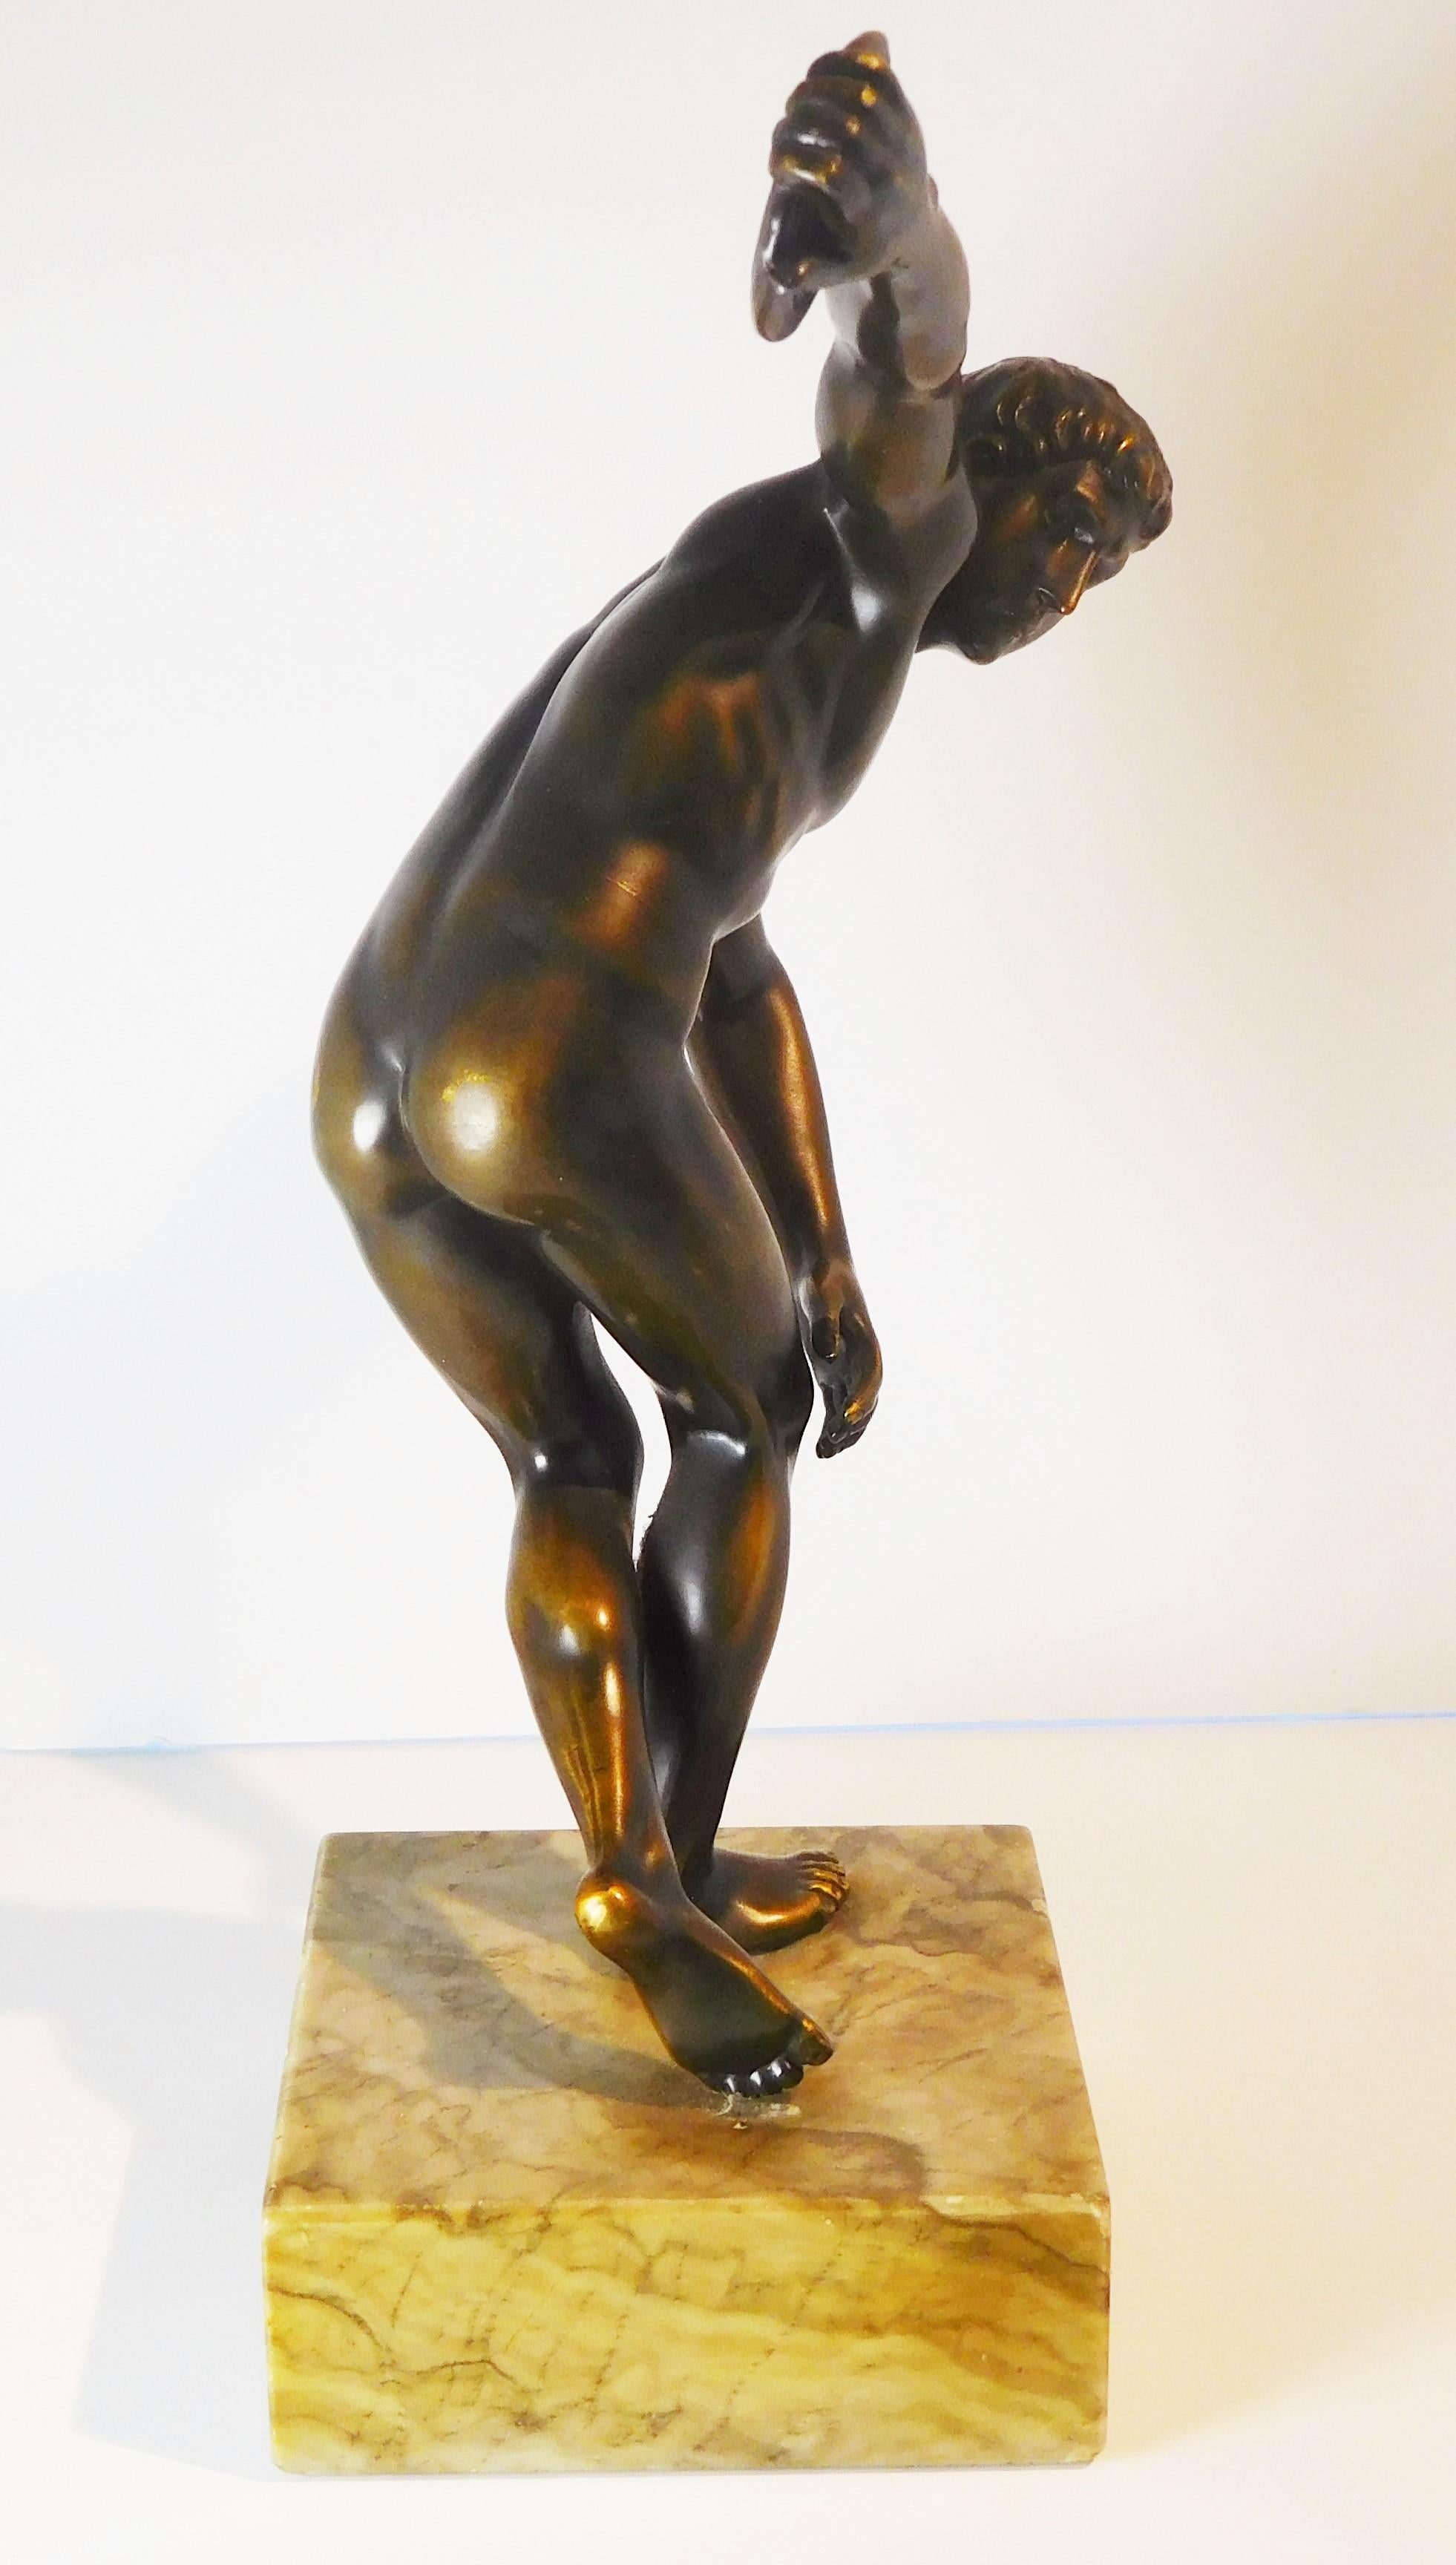 Italian Grand Tour Souvenir Bronze Figure of Discobolus, After the Antique by Myron For Sale